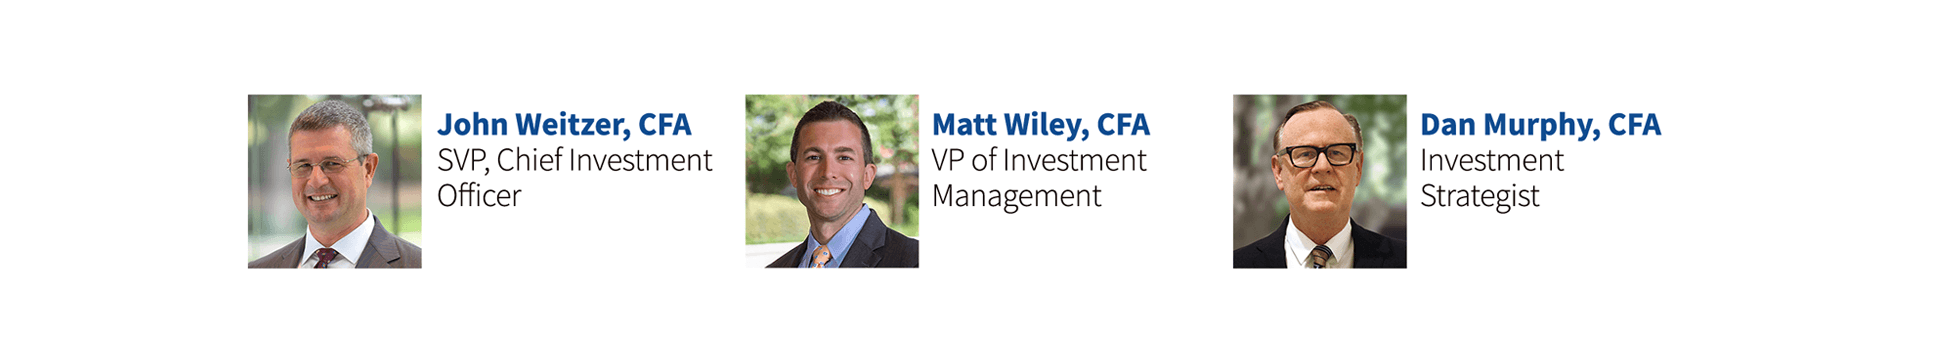 First Command Investment Management Team John Weitzer, CIO, Matt Wiley, VP of Investment Management, and Dan Murphy, Investment Strategist